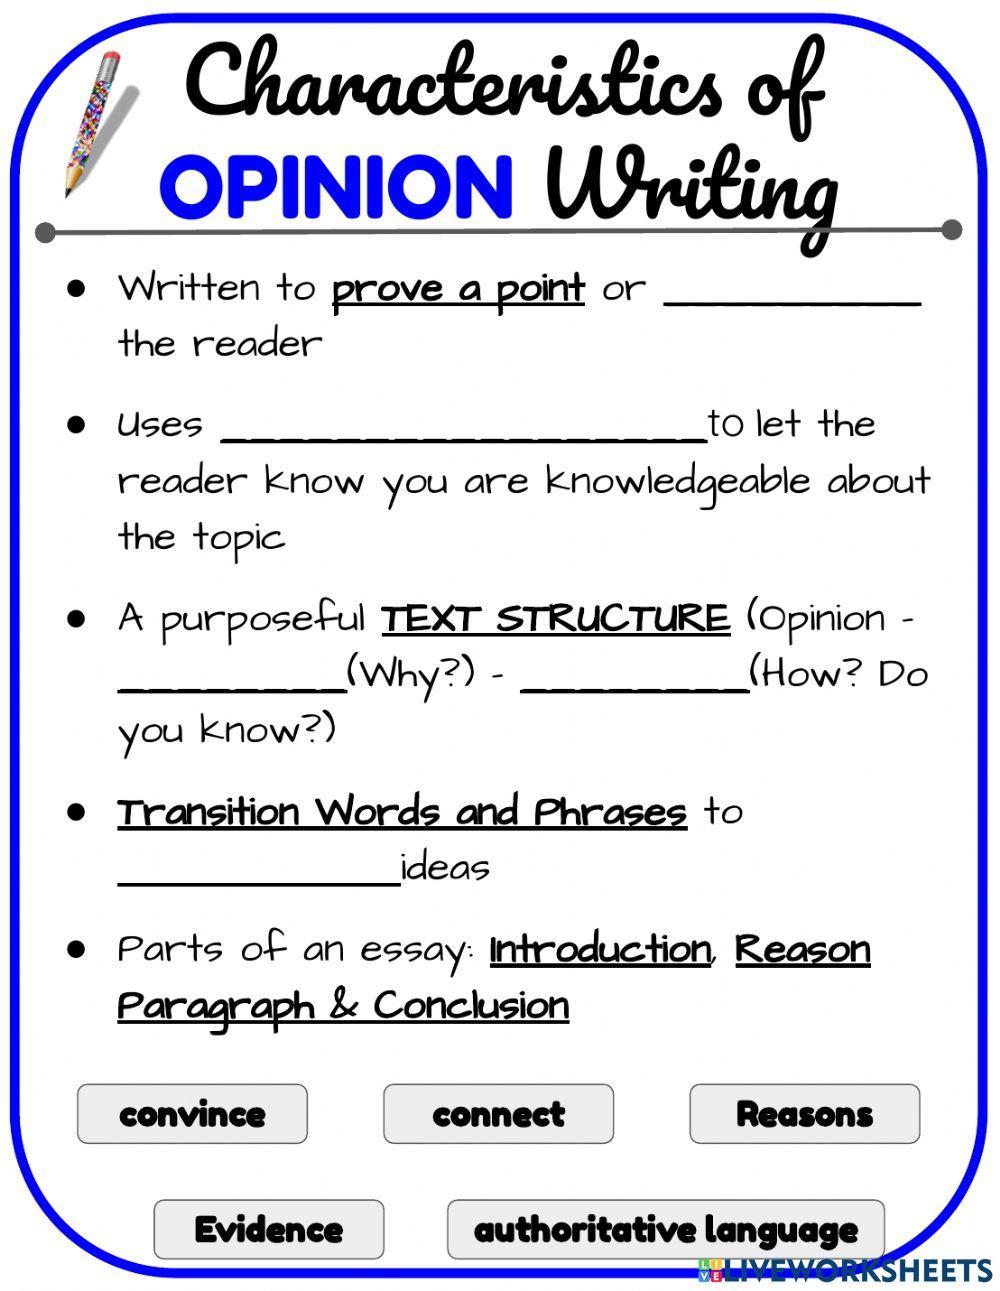 BES-Opinion Writing Characteristics